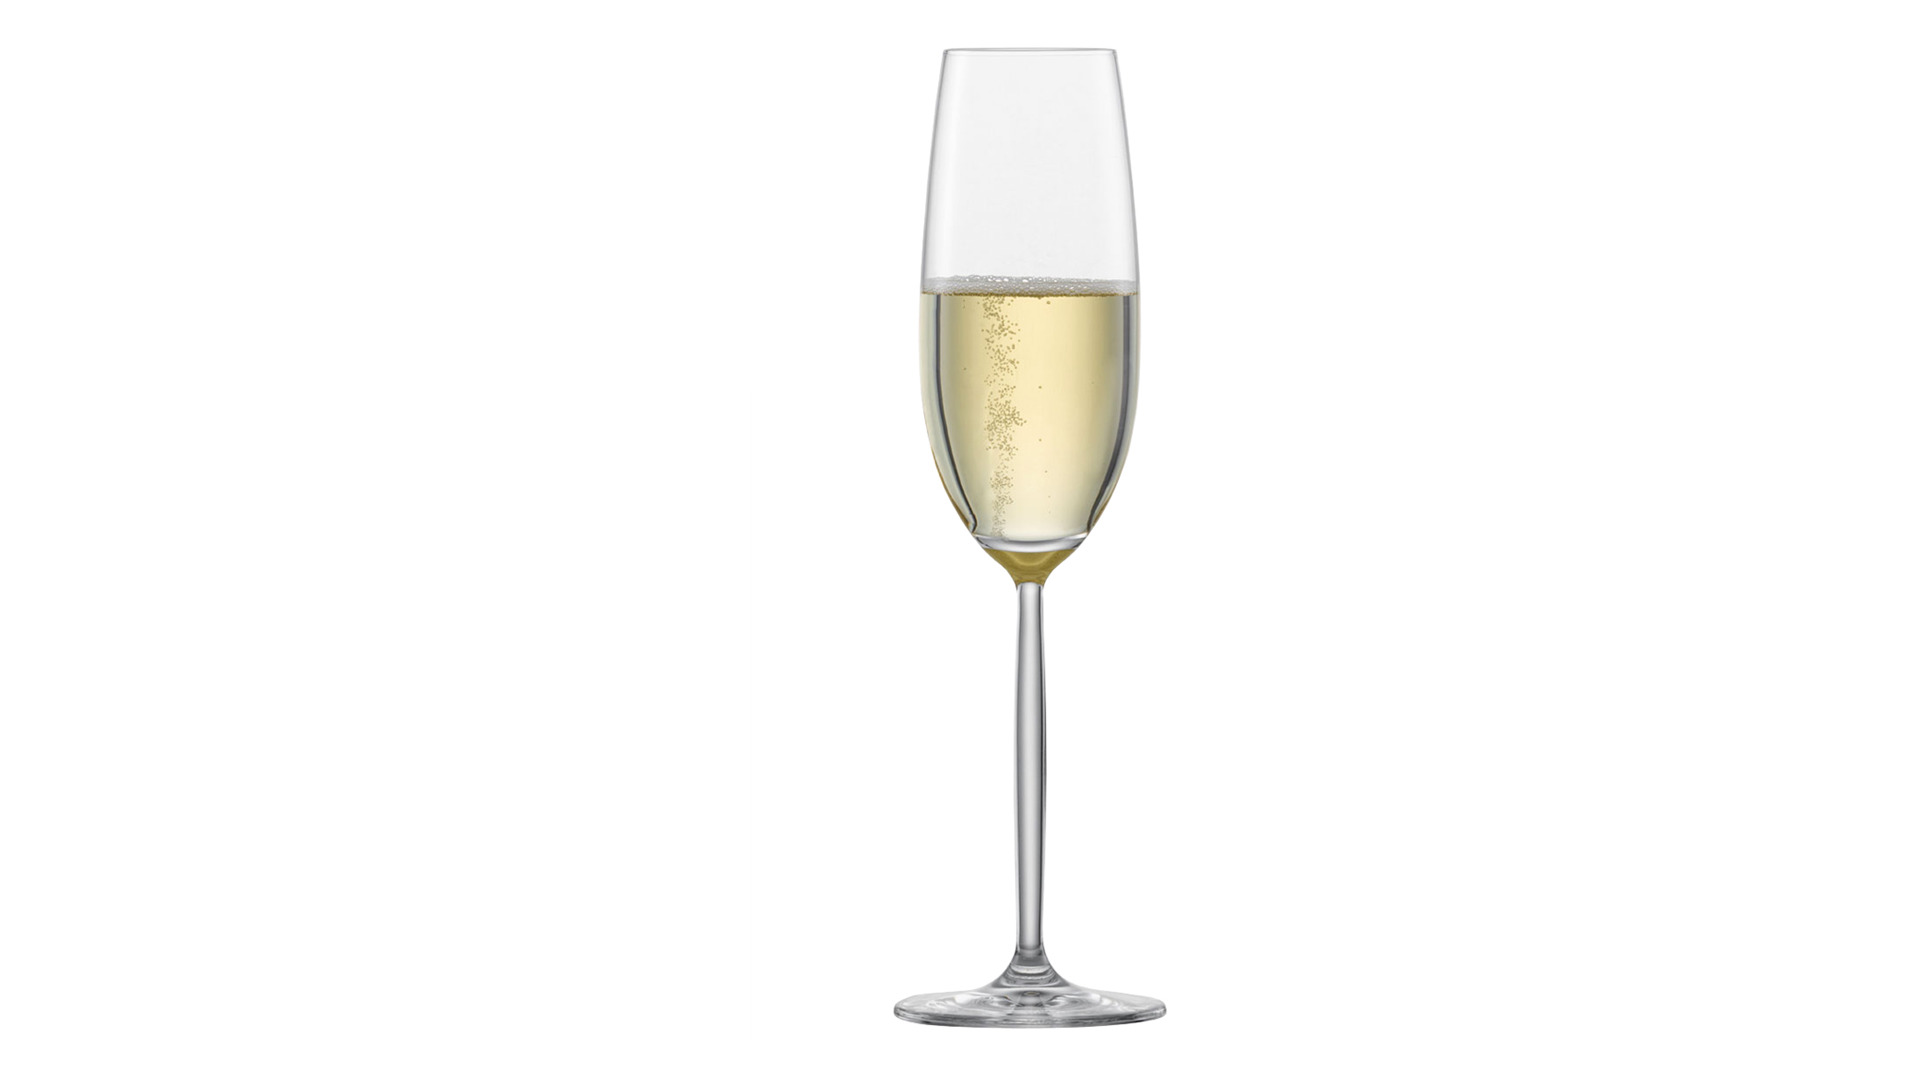 Набор бокалов для шампанского Schott Zwiesel Дива 219мл, 6шт